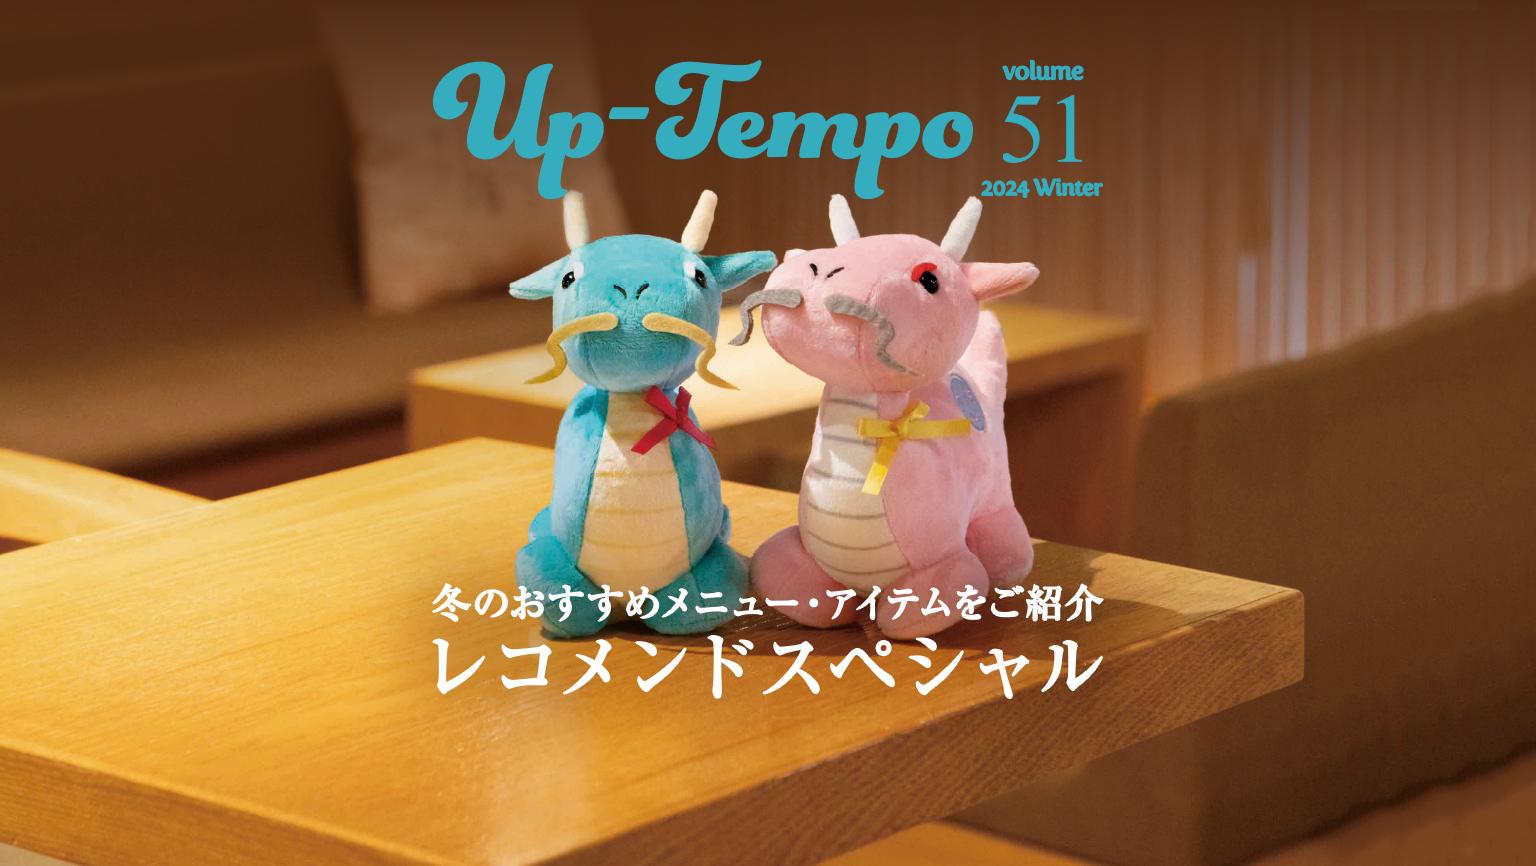 Up-Tempo vol.51 冬のおすすめメニュー・アイテムをご紹介 レコメンドスペシャル